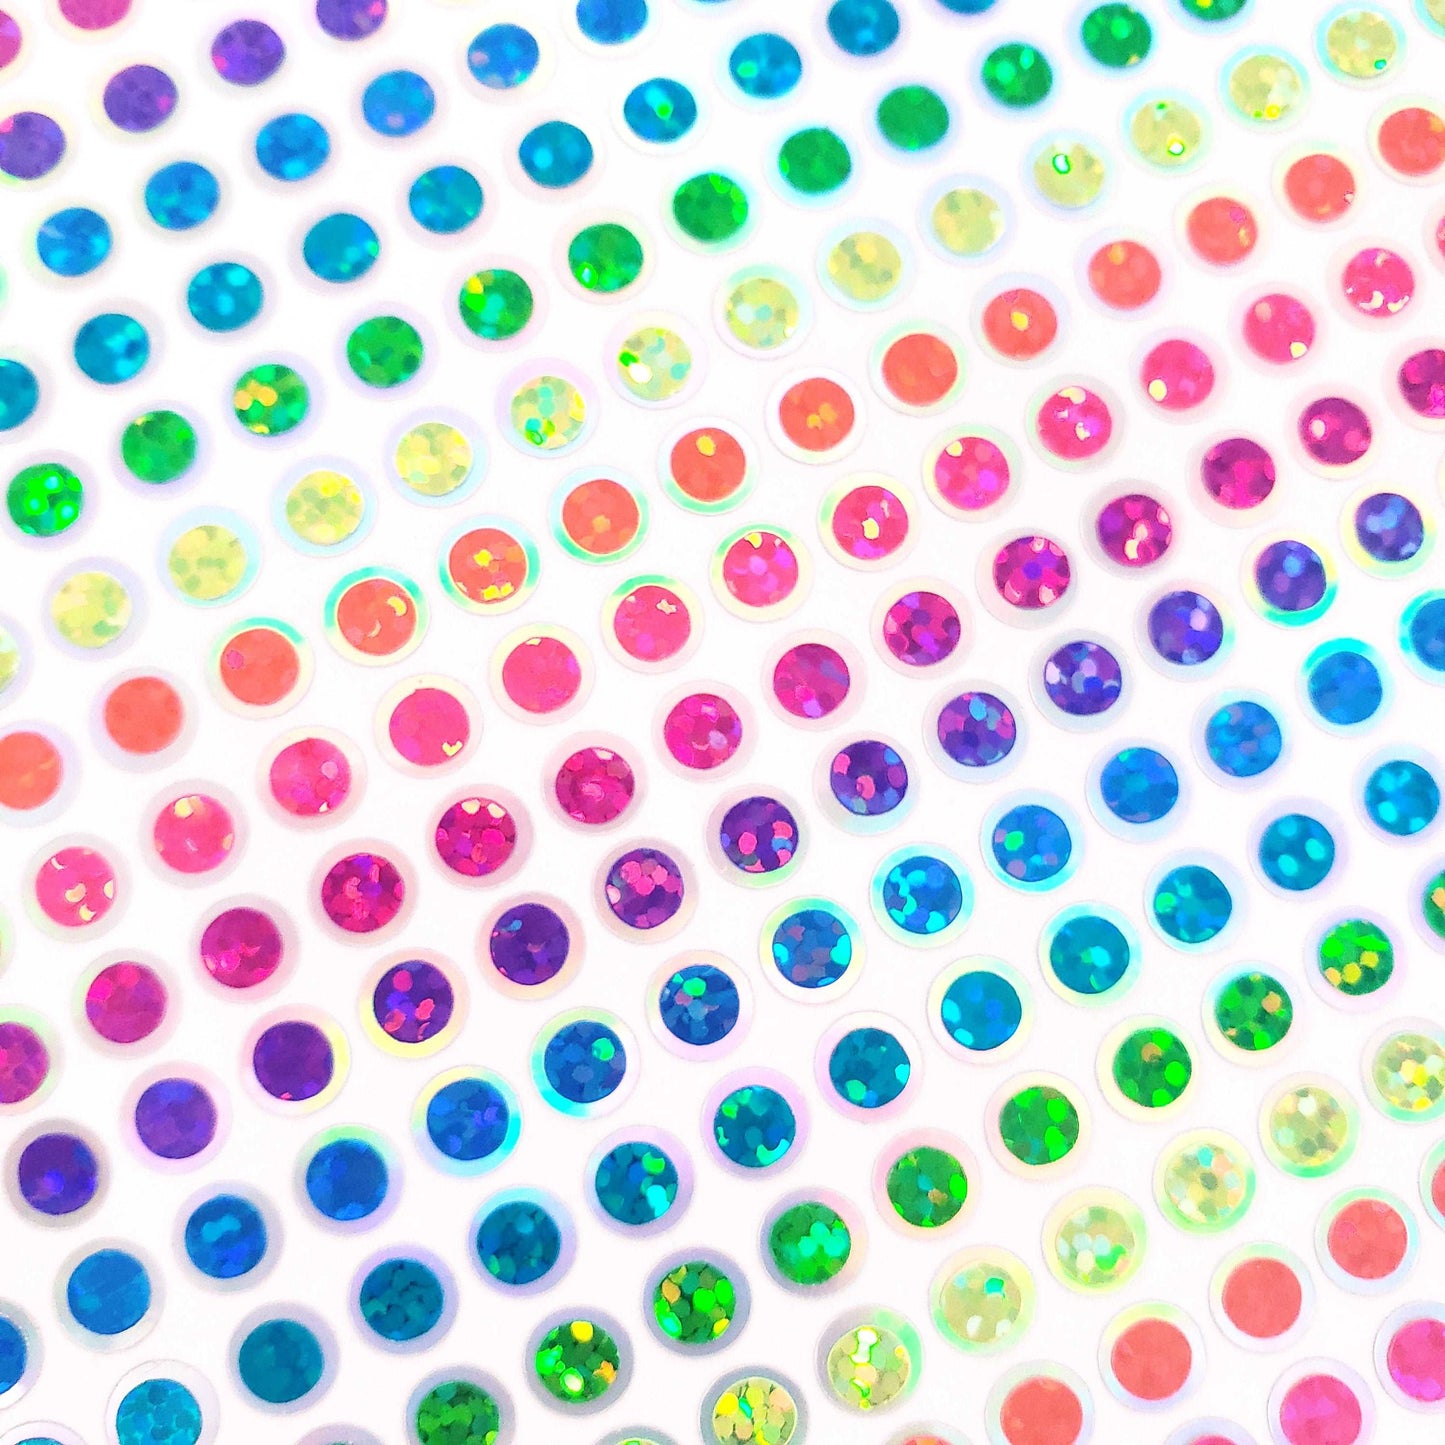 Neon Rainbow Dots Stickers, set of 368